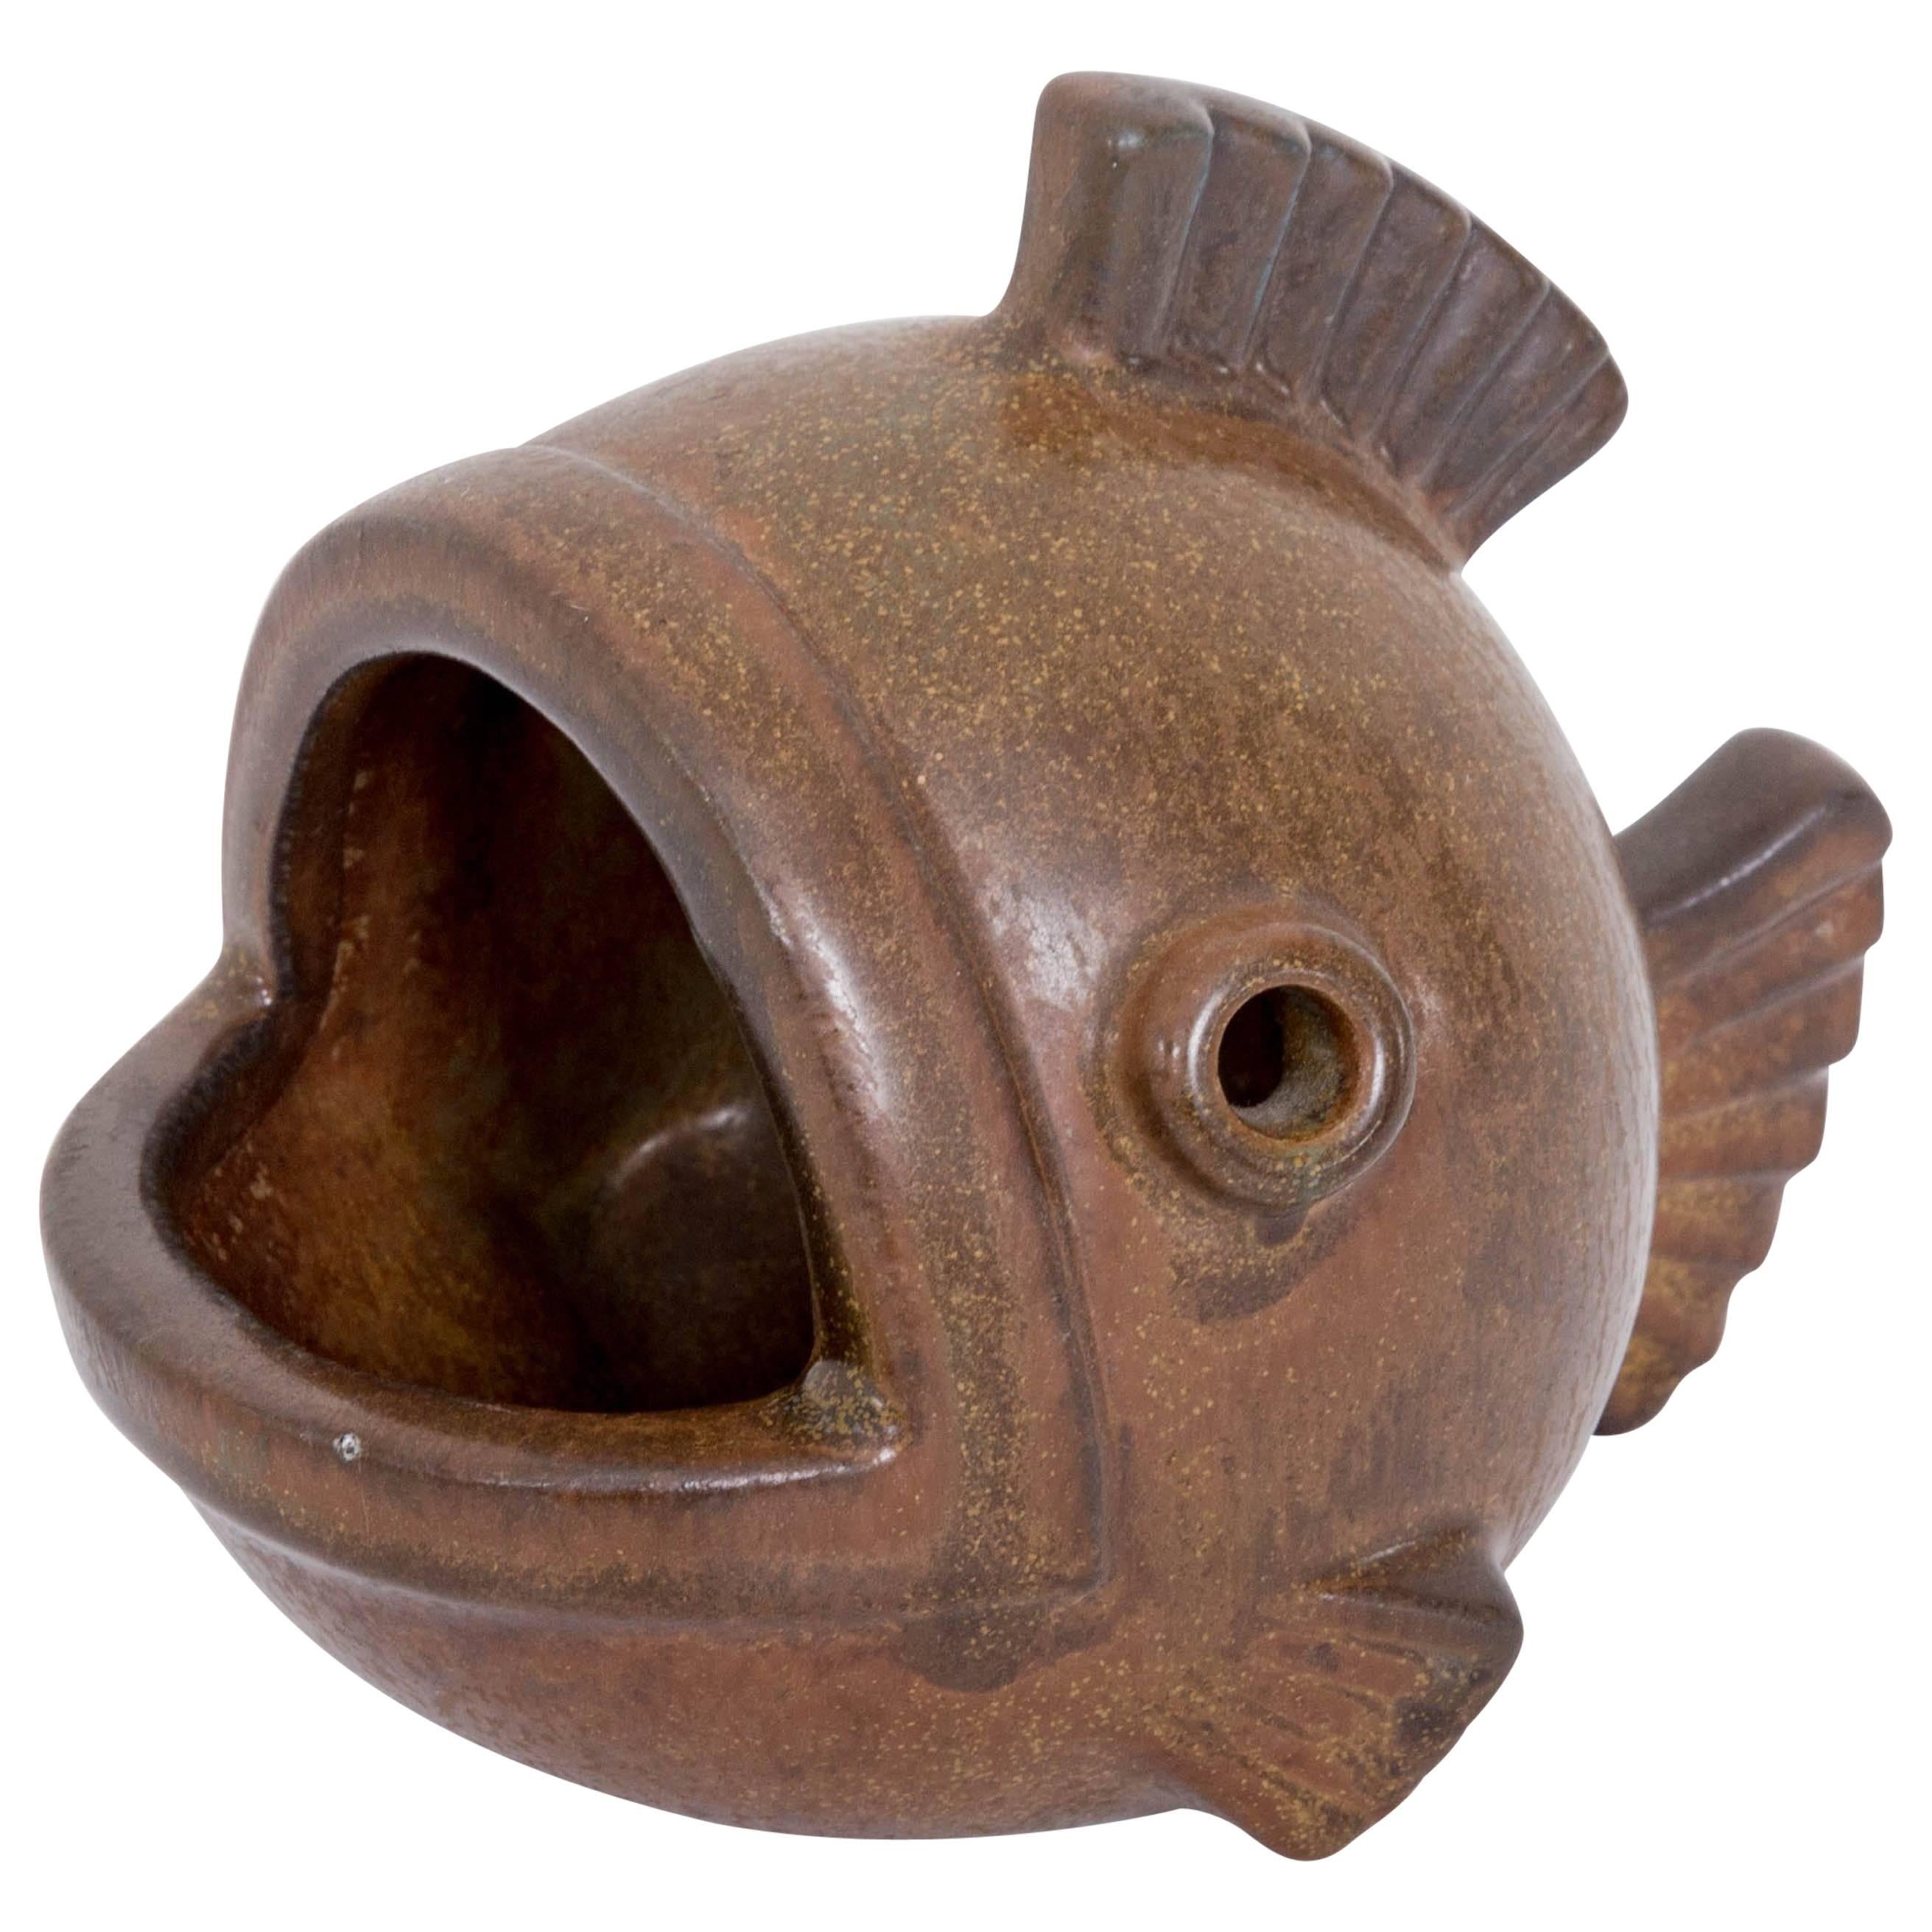 Fish Figurine by Gunnar Nylund for Rorsstand